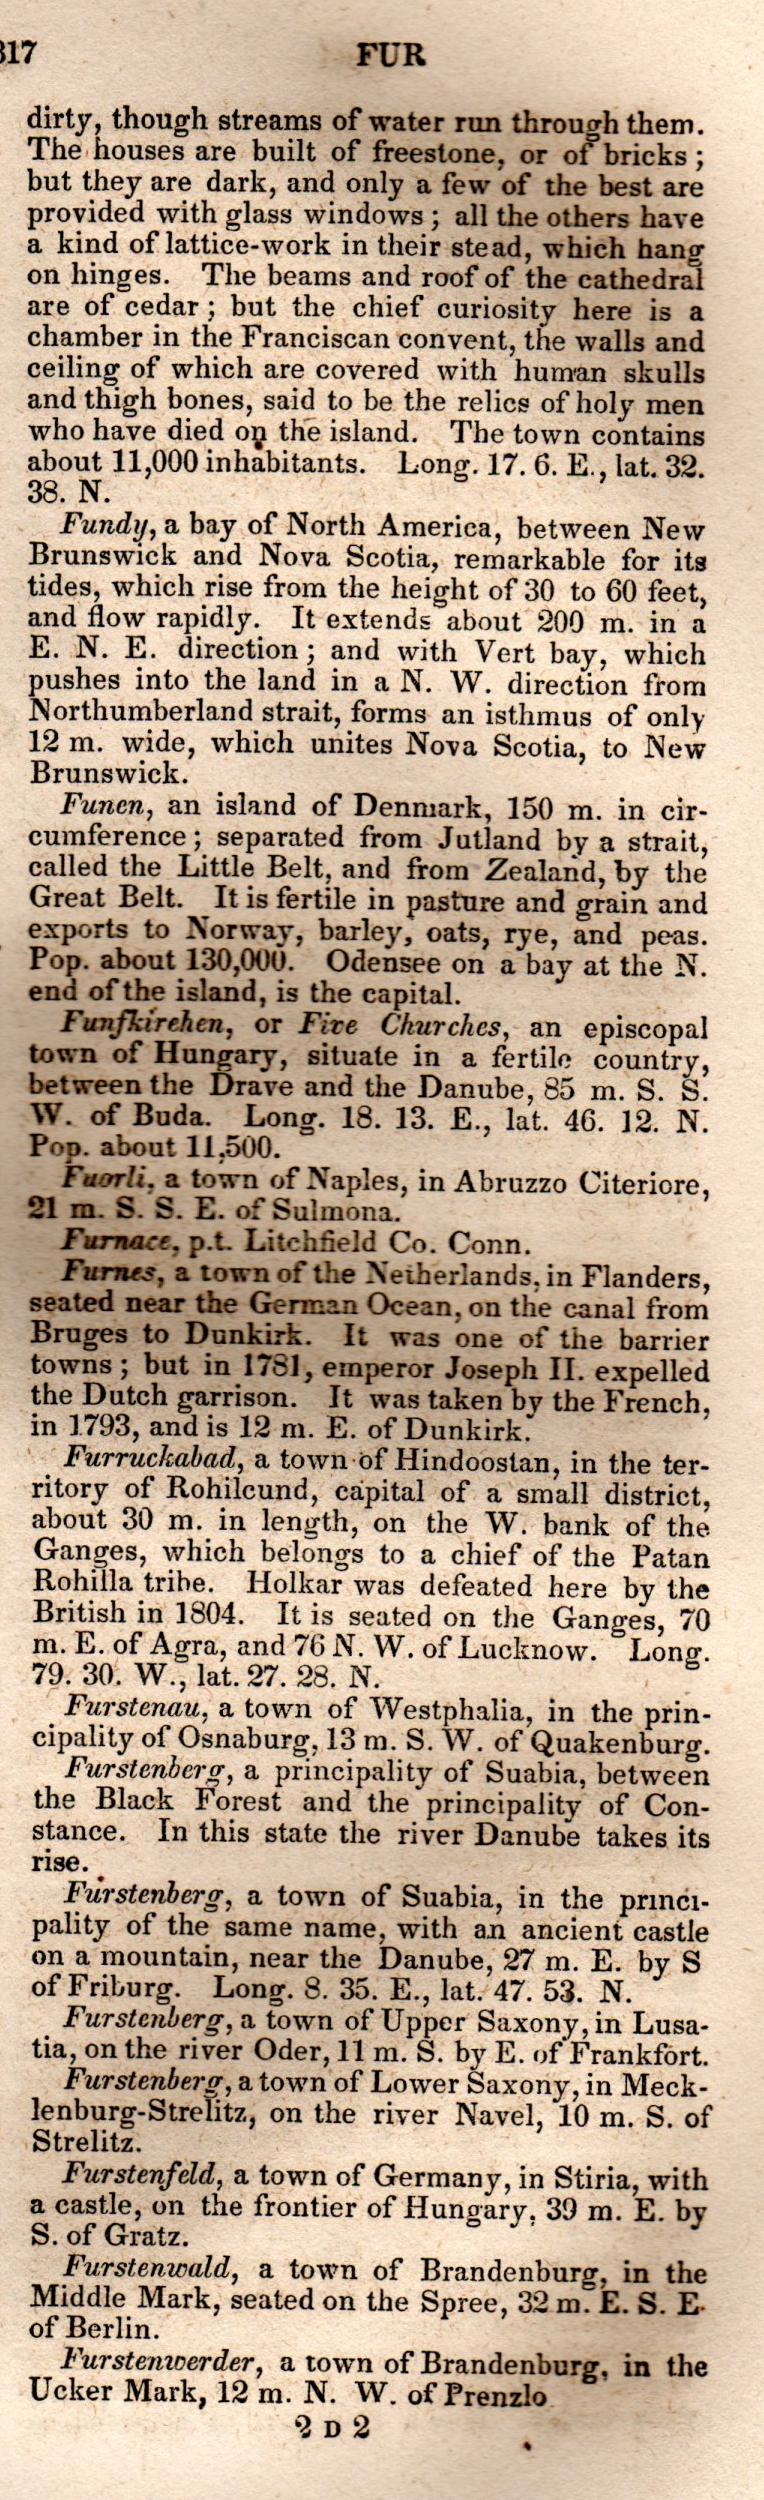 Brookes’ Universal Gazetteer (1850), Page 317 Right Column